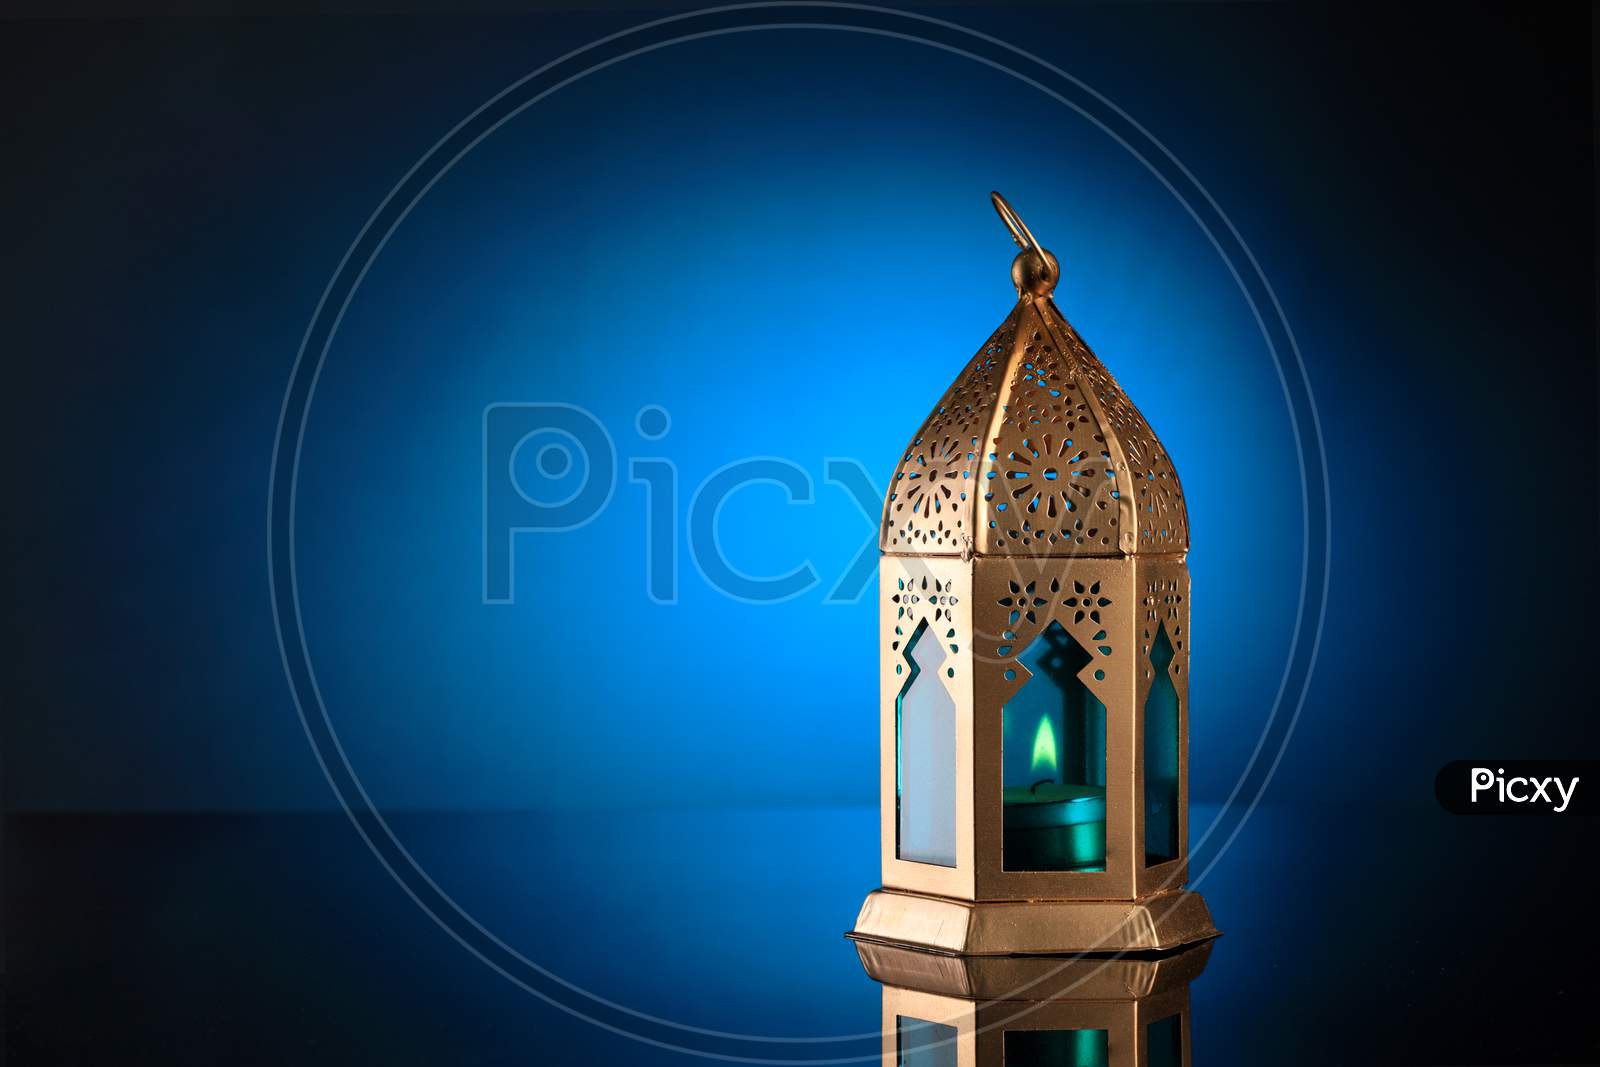 Gold And Blue Islamic Lantern For Ramadan / Eid Celebrations